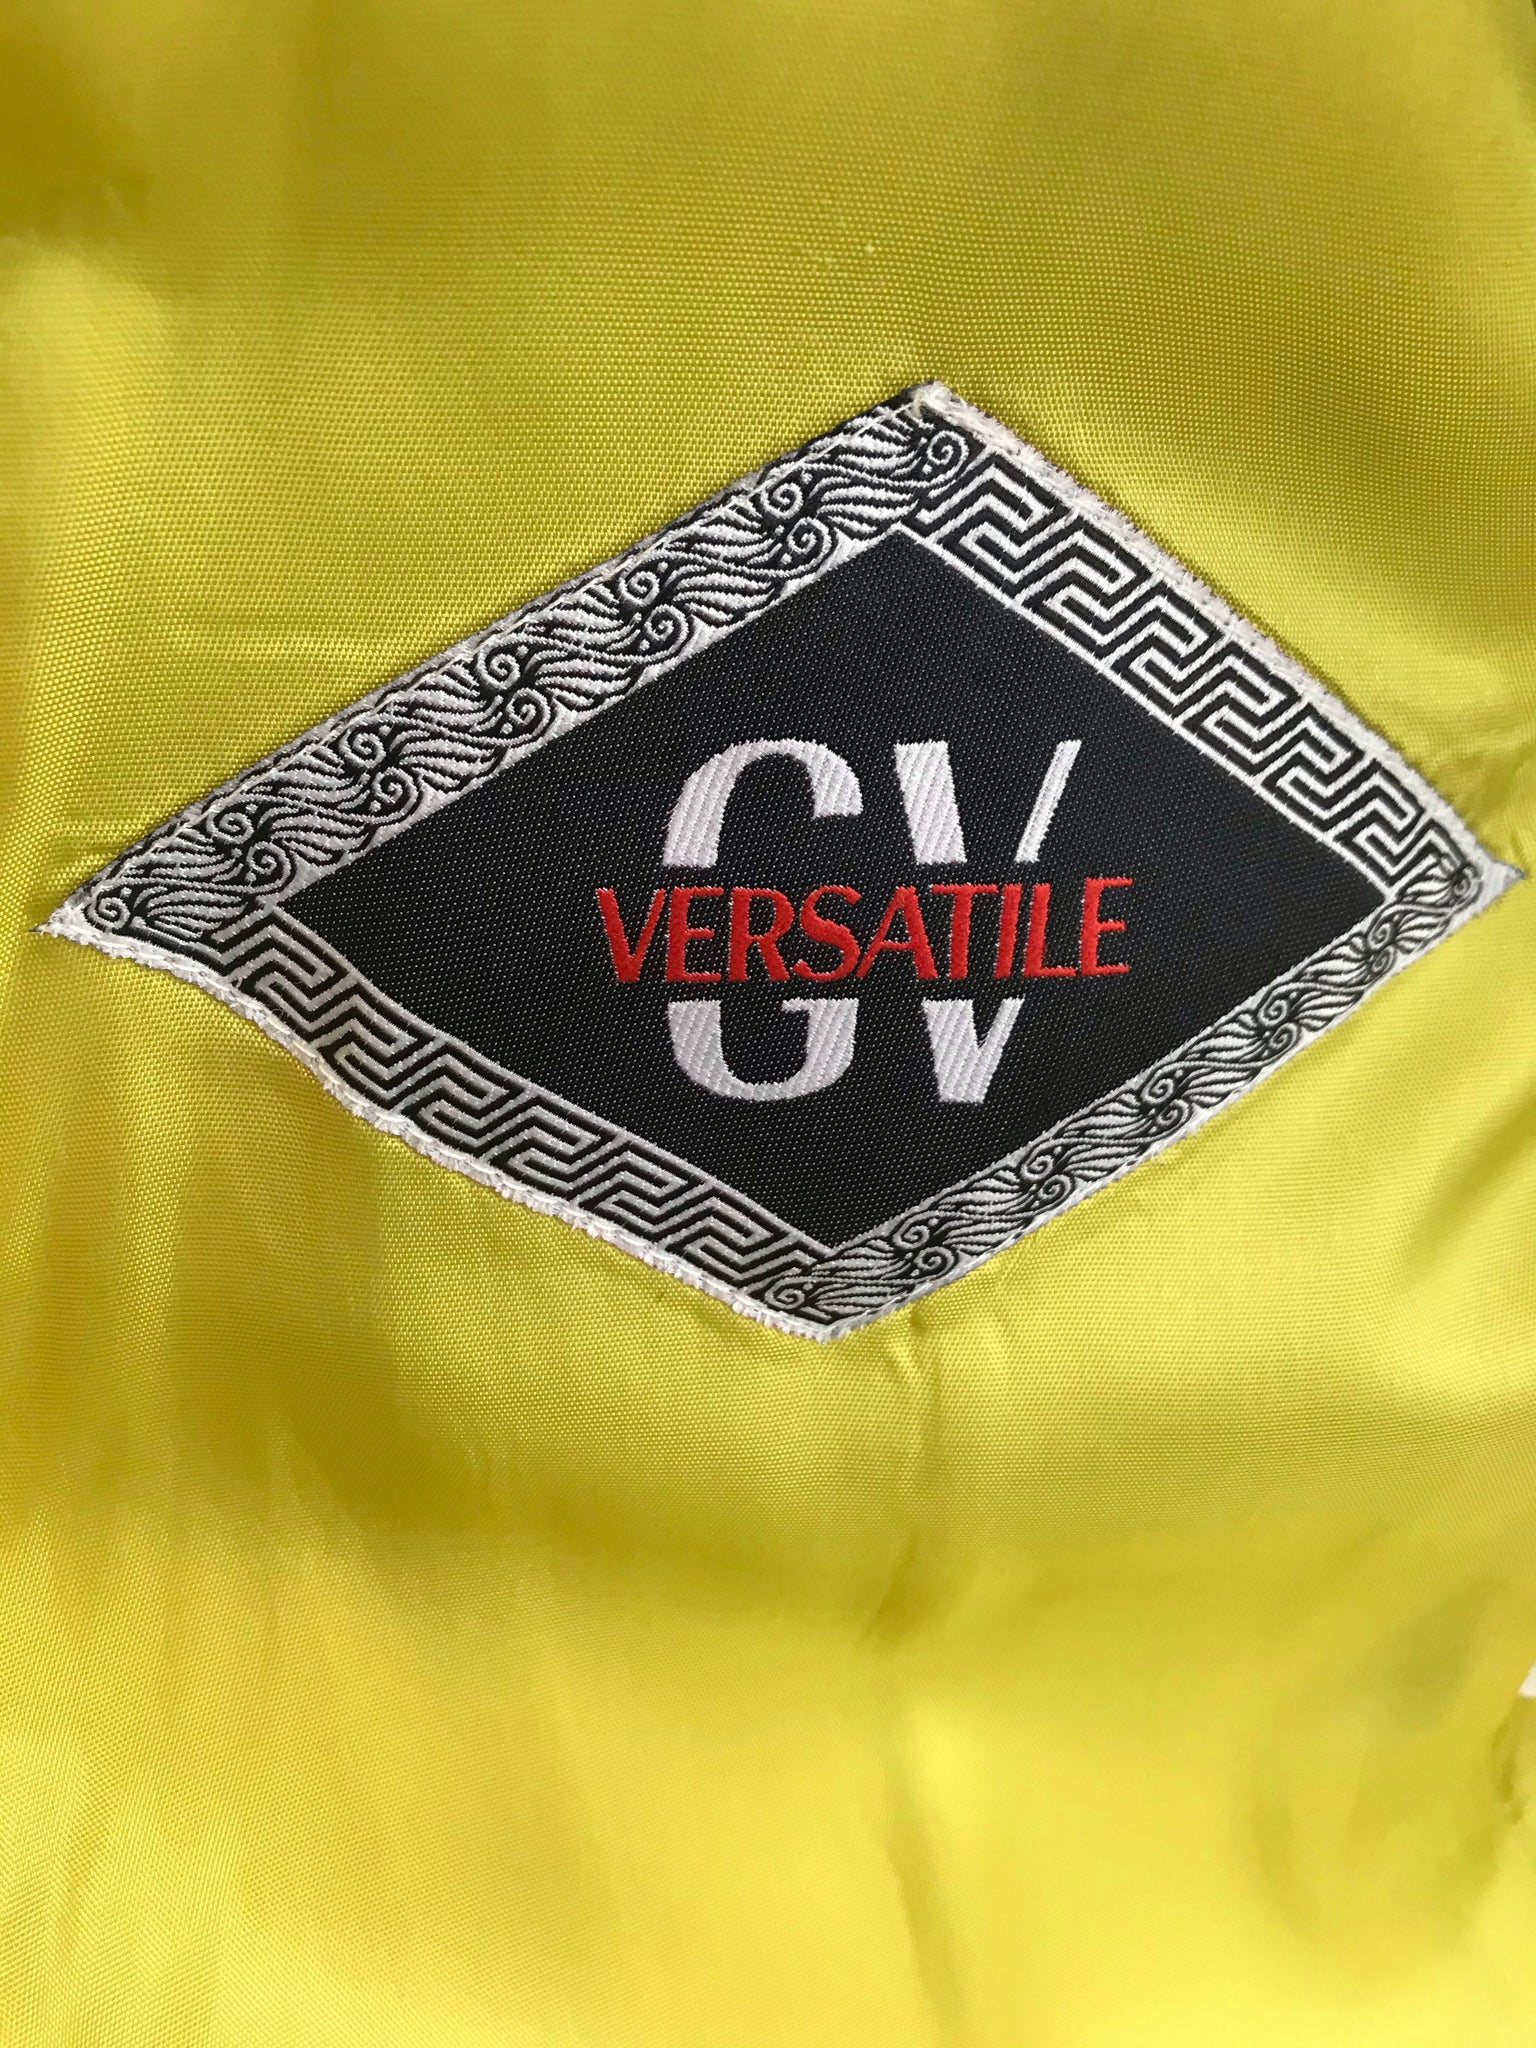 Isabella's Wardrobe Gianni Versace Vintage Wool Skirt Suit.